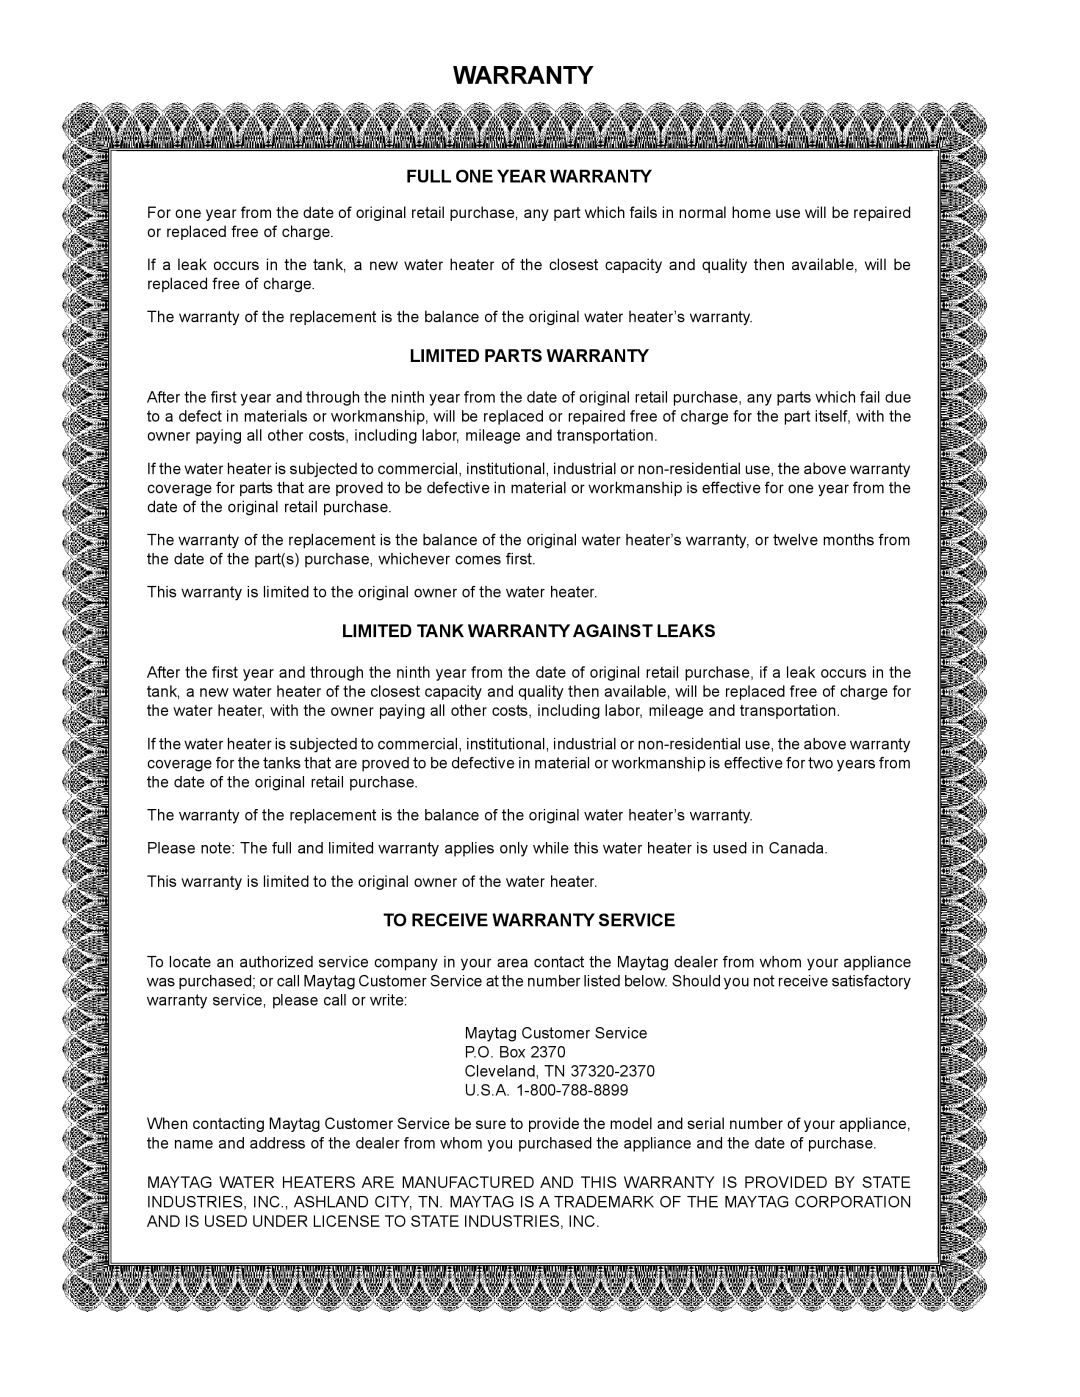 Maytag HXN4975S manual Full One Year Warranty, Limited Parts Warranty, Limited Tank Warranty Against Leaks 